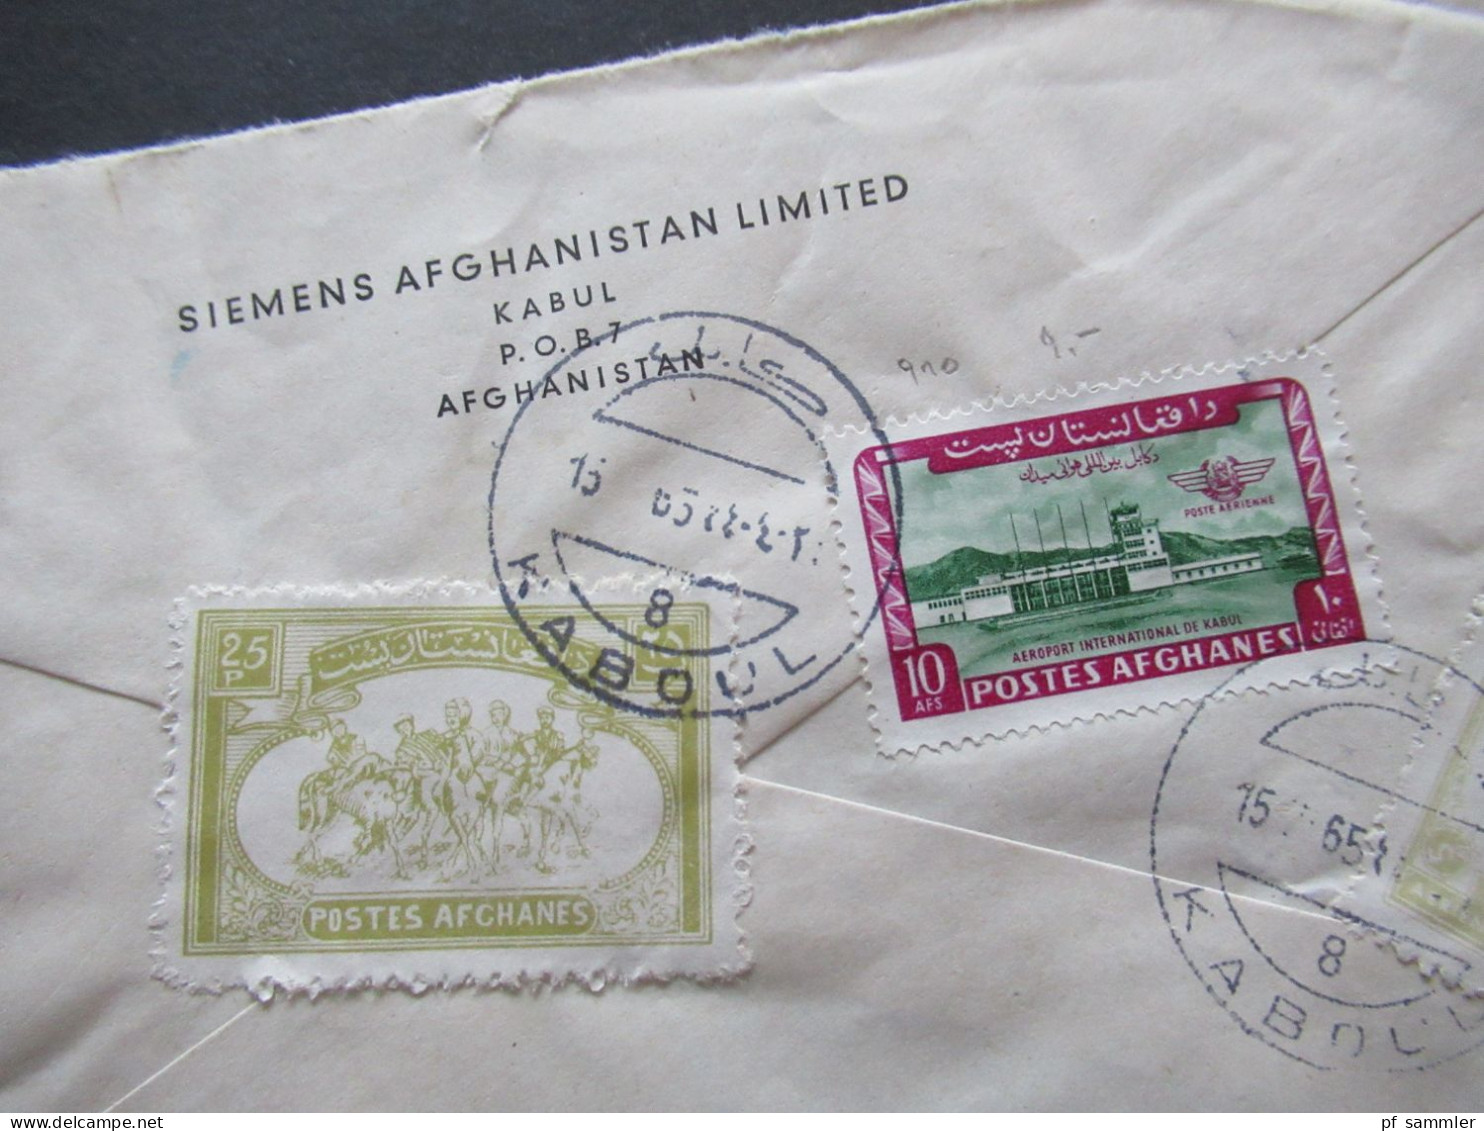 Asien Afghanistan 1965 Registered Air Mail Postes Afghanes Umschlag Siemens Afghanistan Limited Kabul - Menden Sauerland